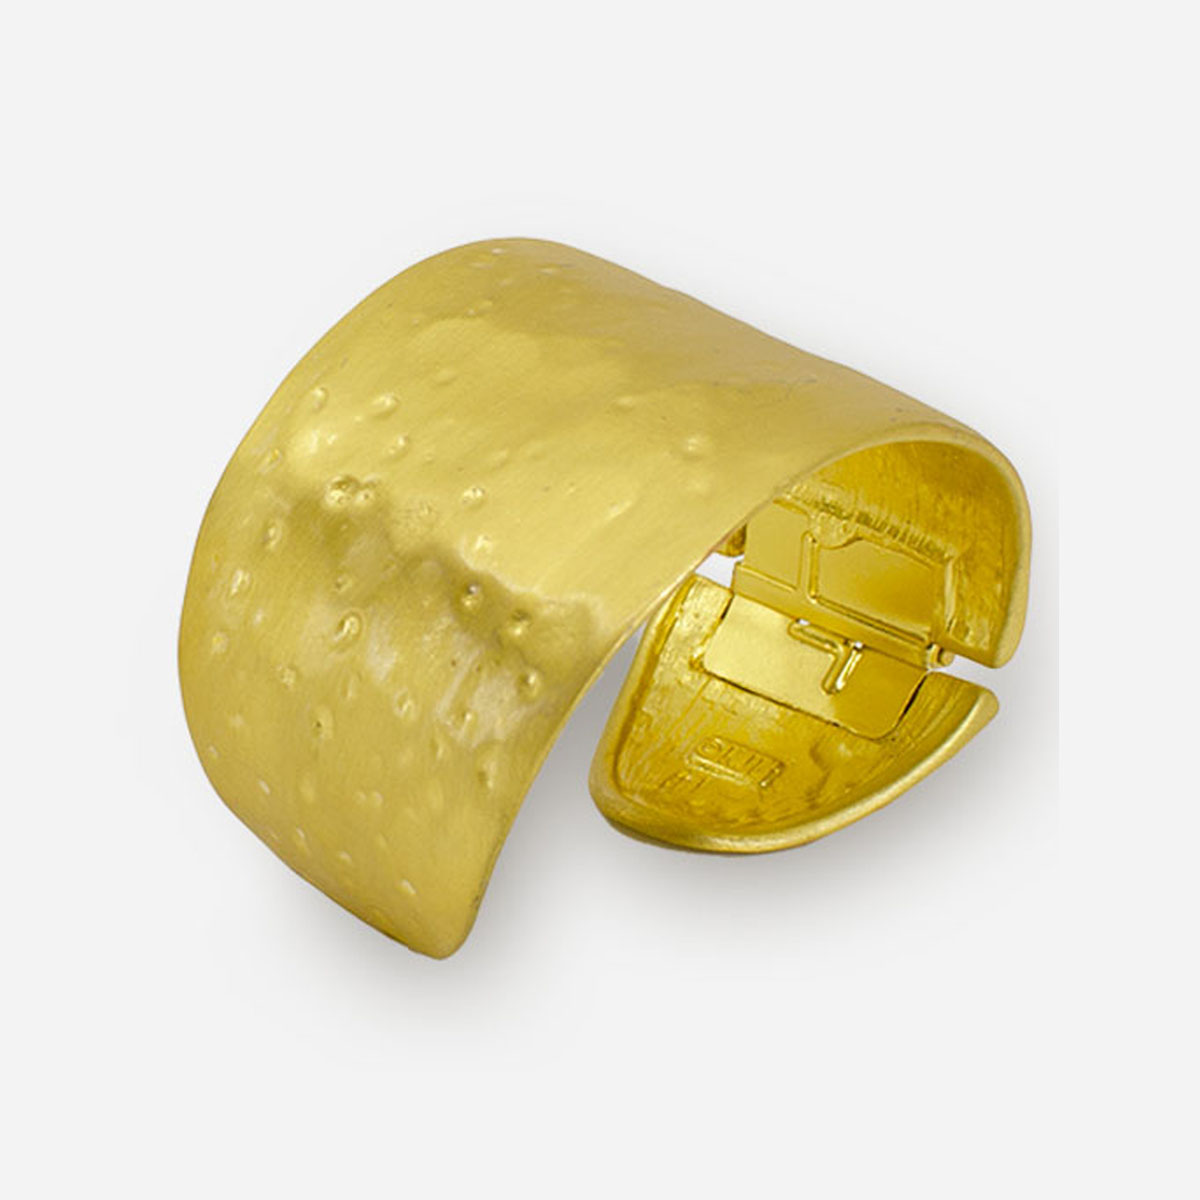 Hammered gold cuff bracelet